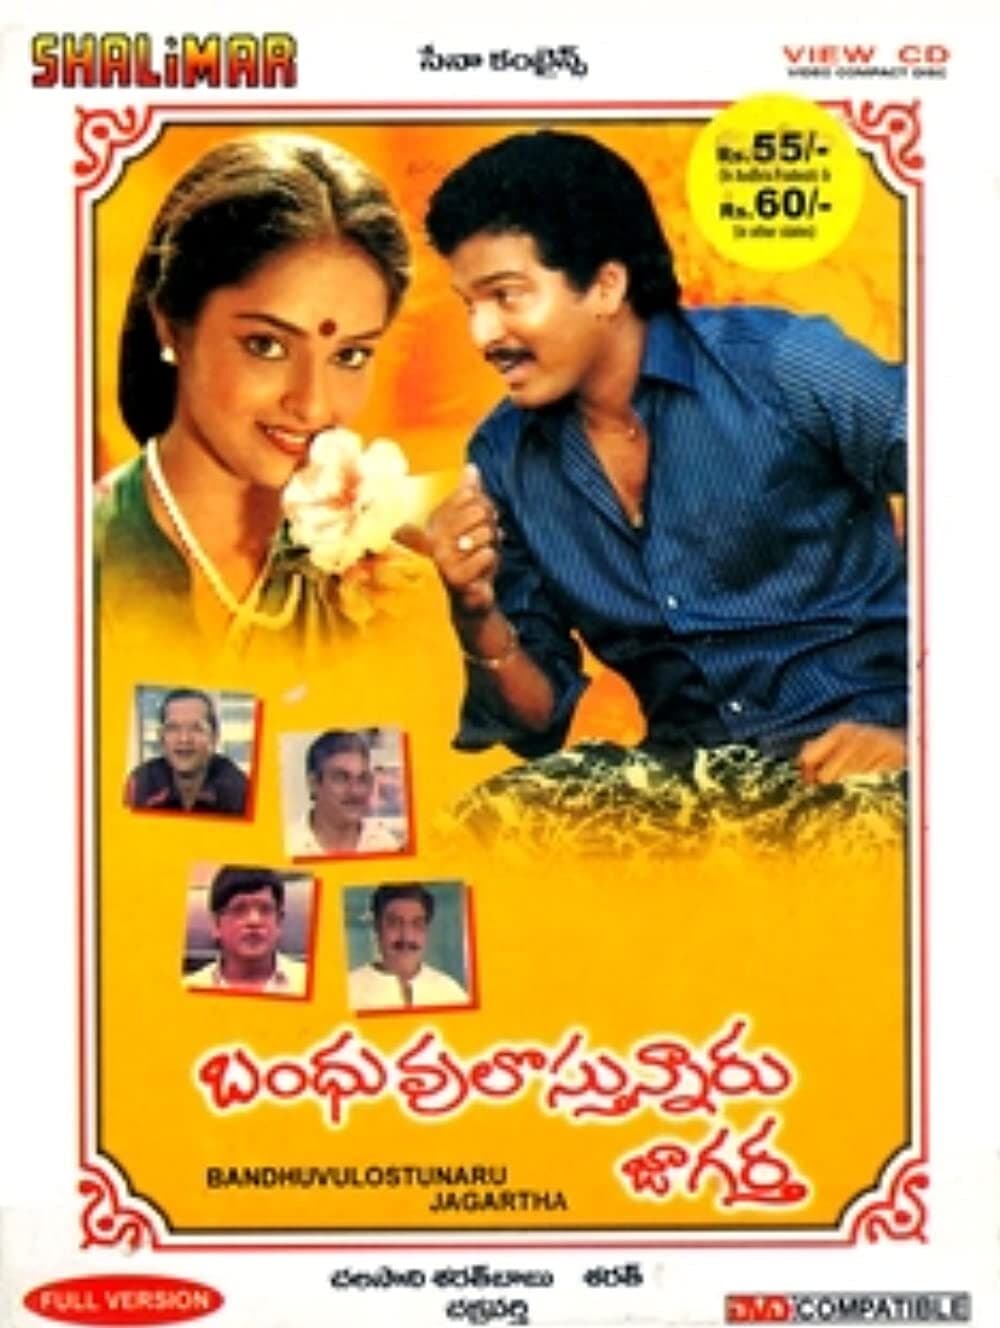 Bandhuvulostunnaru Jagratha (1989)